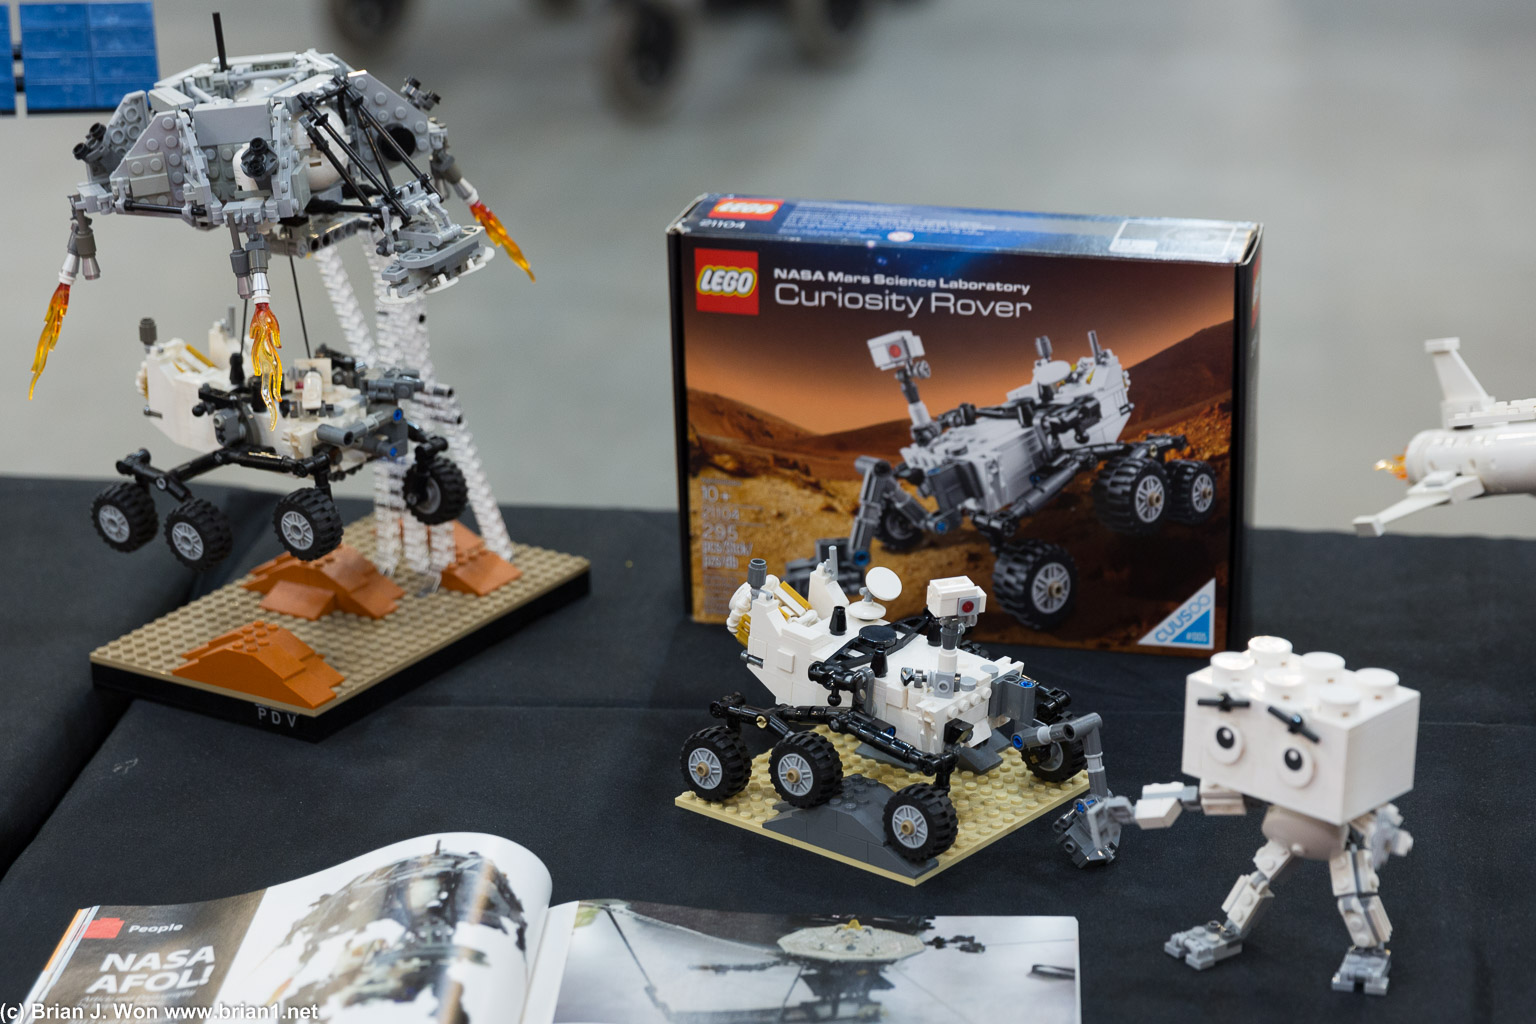 The very rare Lego Cuusoo Mars Science Laboratory Curiosity Rover set.